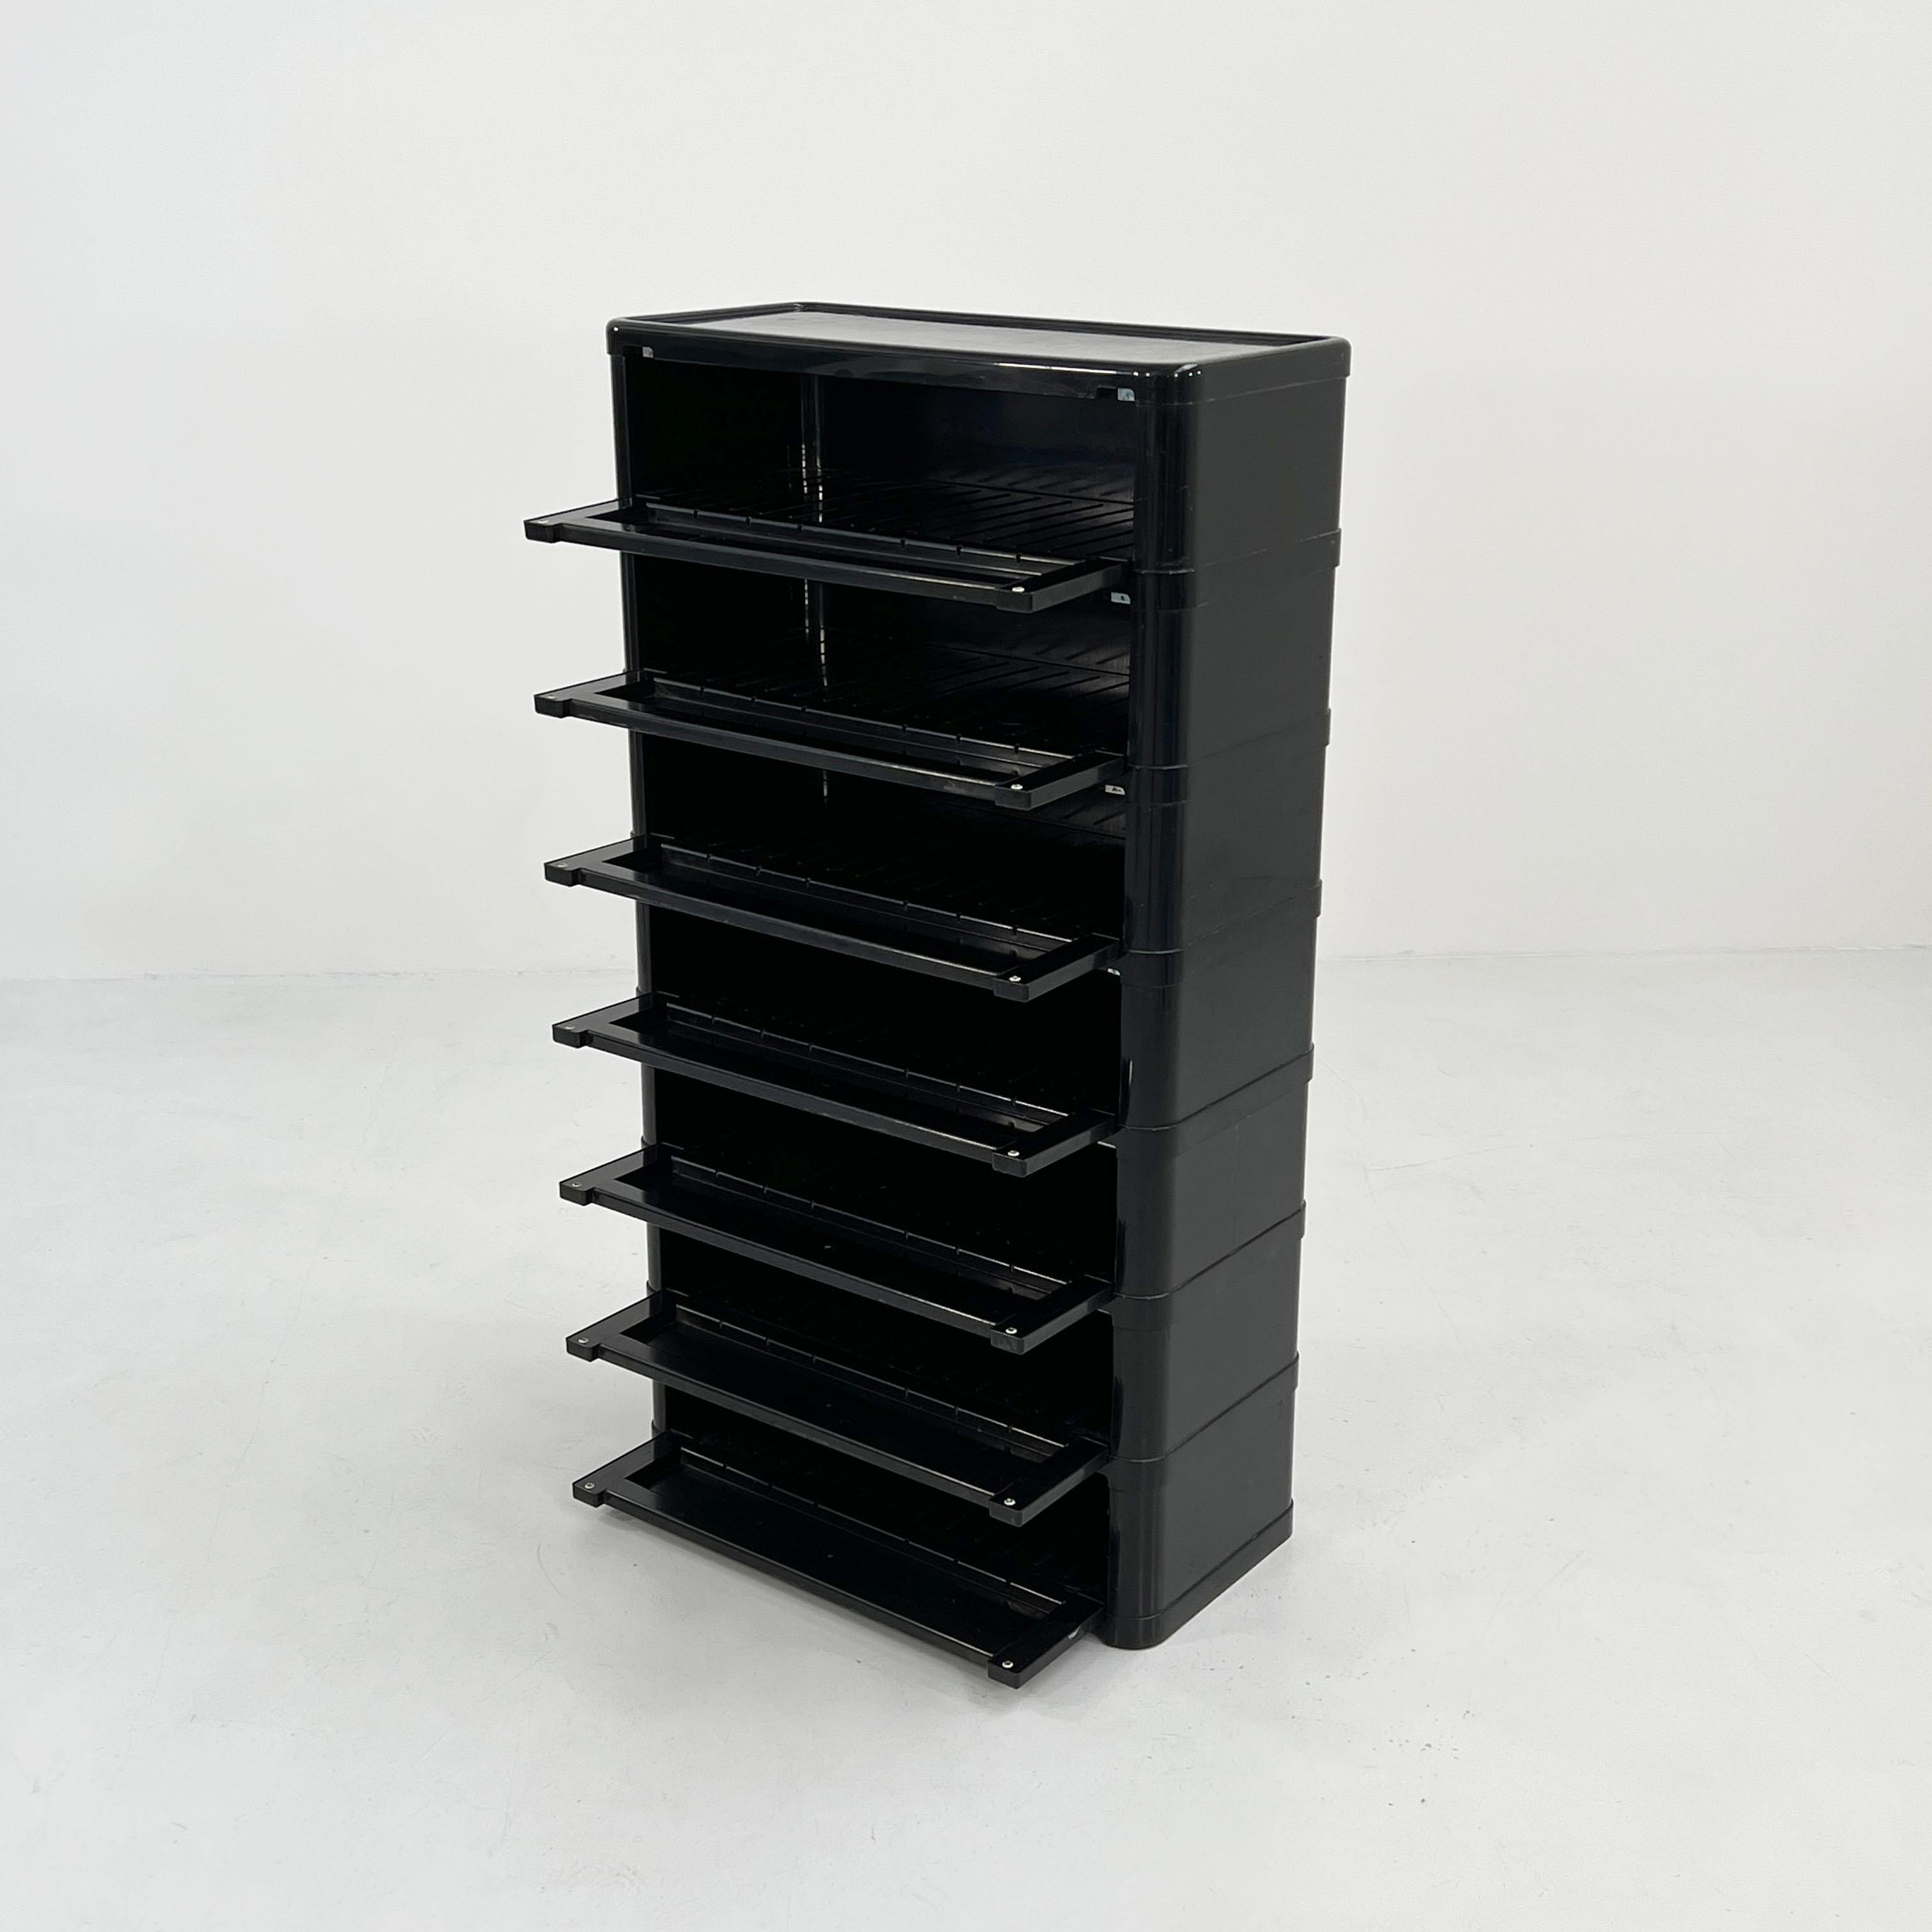 Italian Black Chest of Drawers Model “4964” by Olaf Von Bohr for Kartell, 1970s